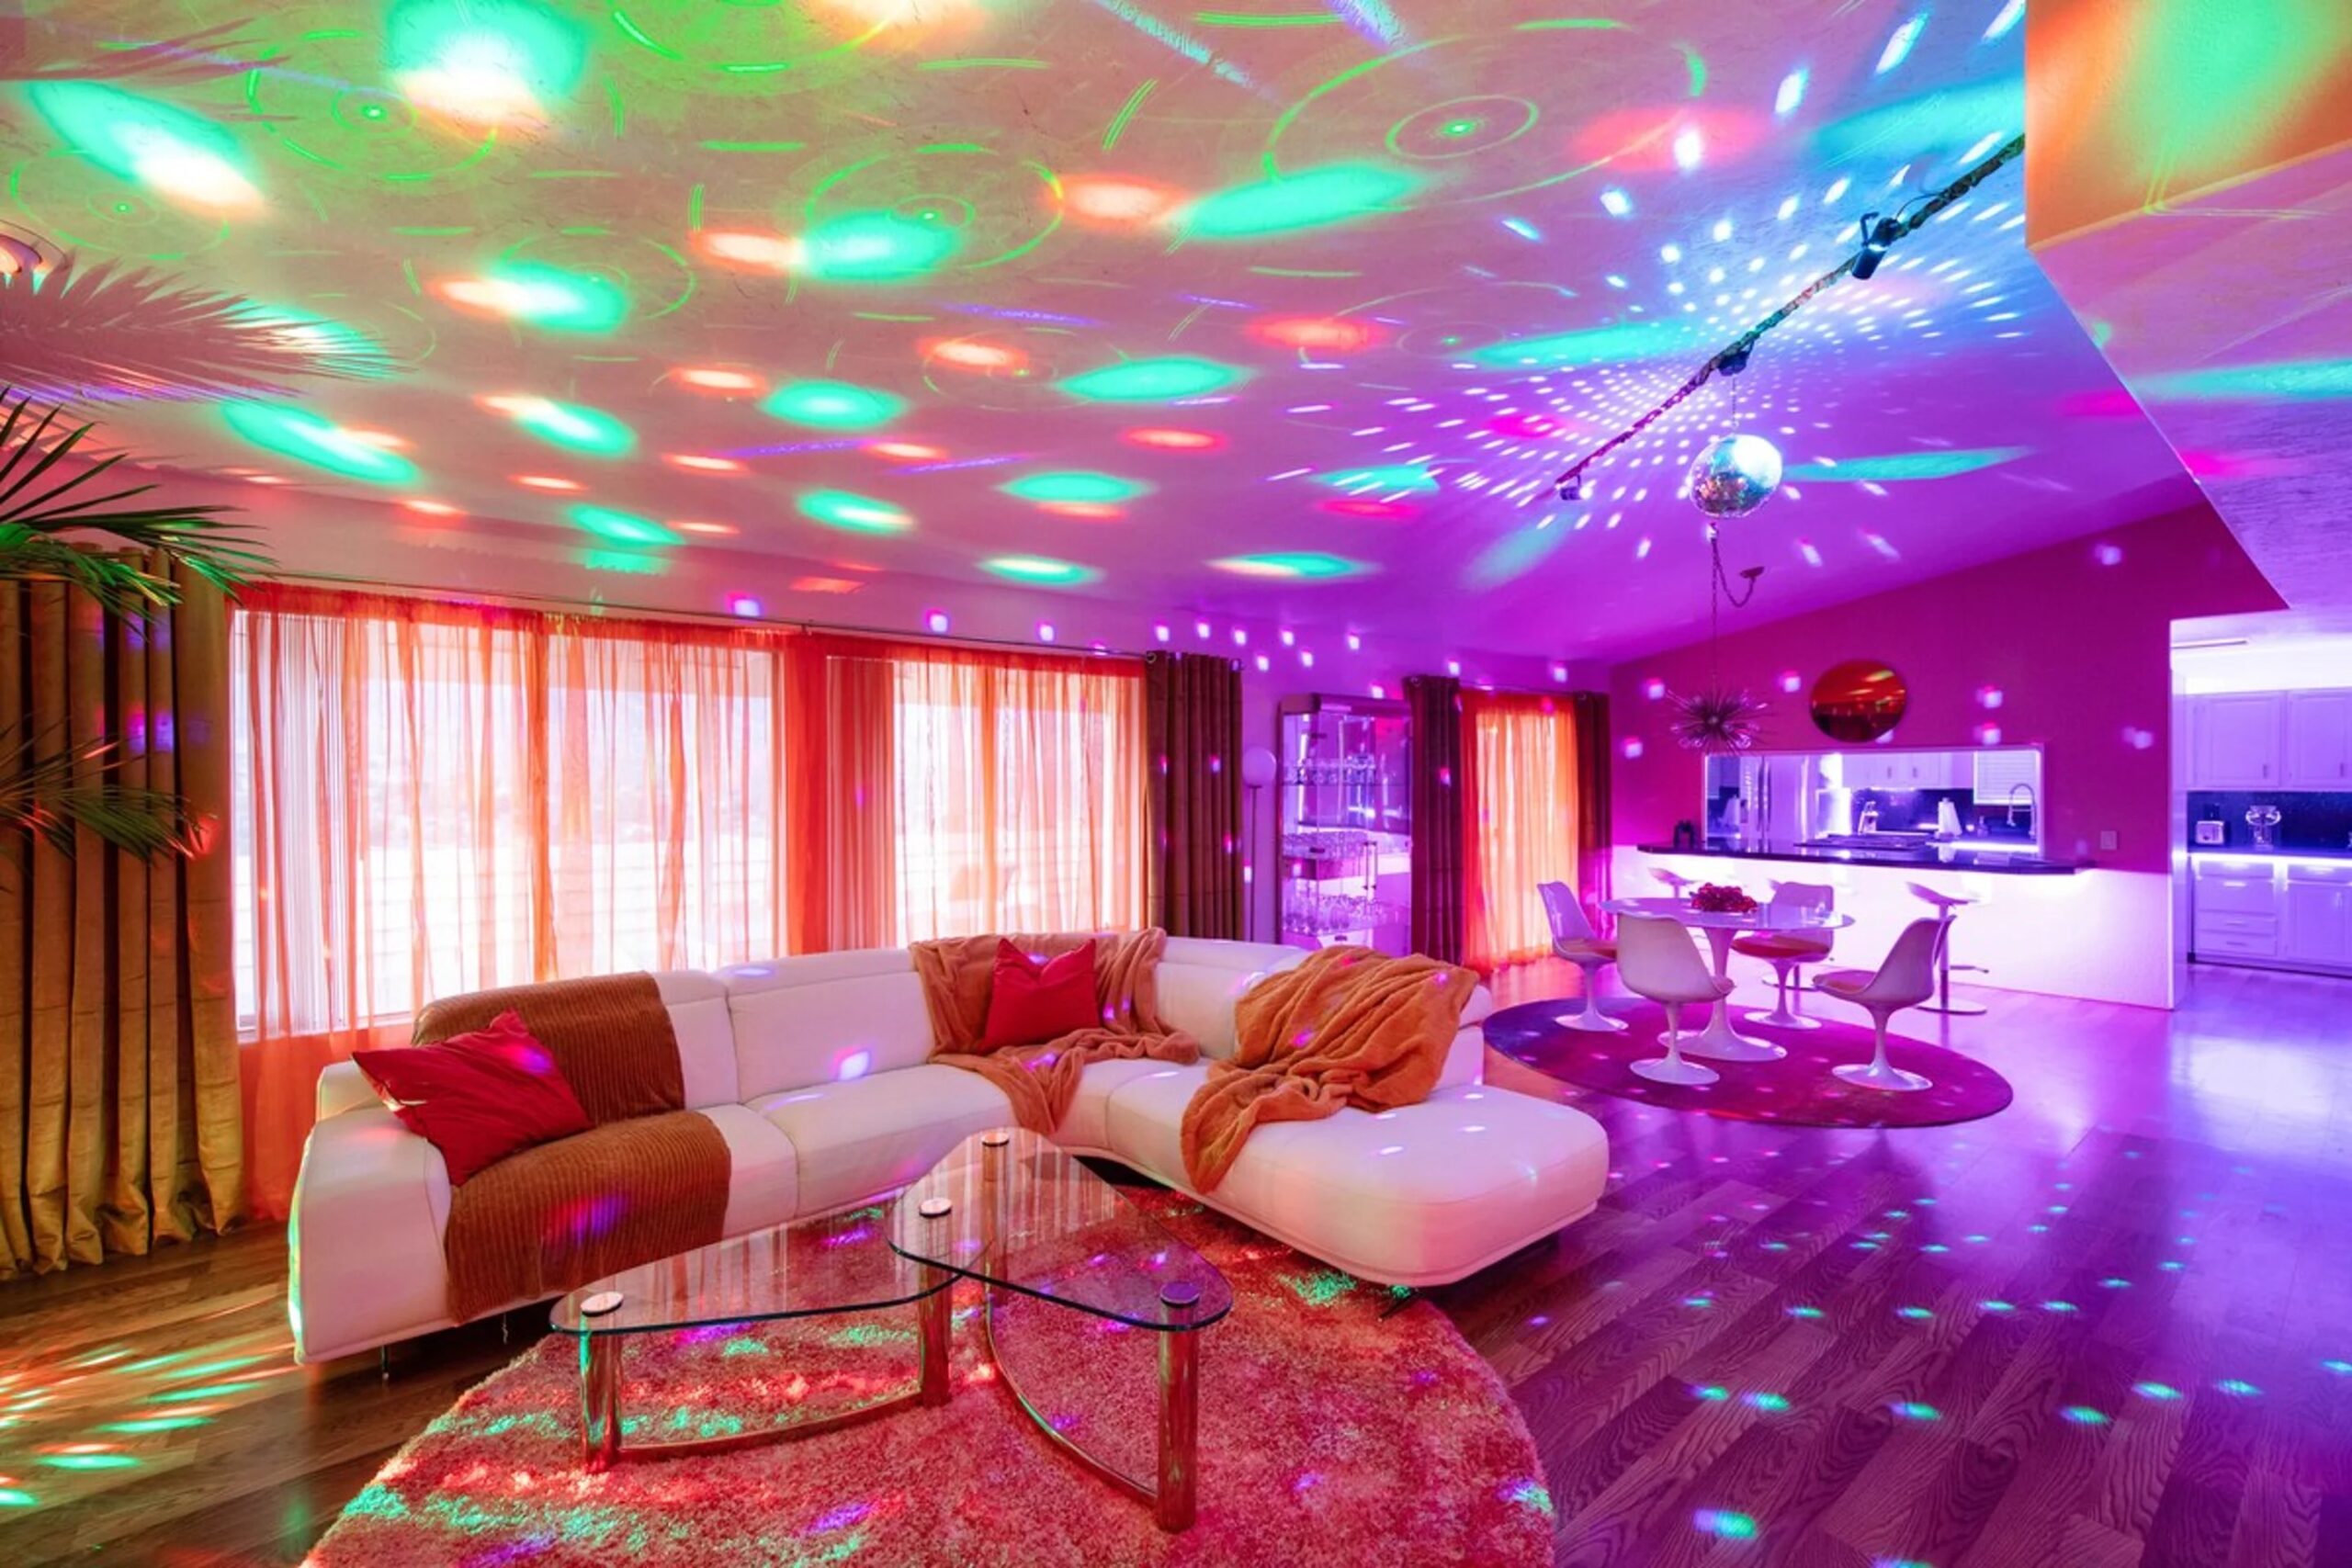 Interior view of a Disco Daydream retro themed home with party lights illuminating the room near Joshua Tree National Park, California.